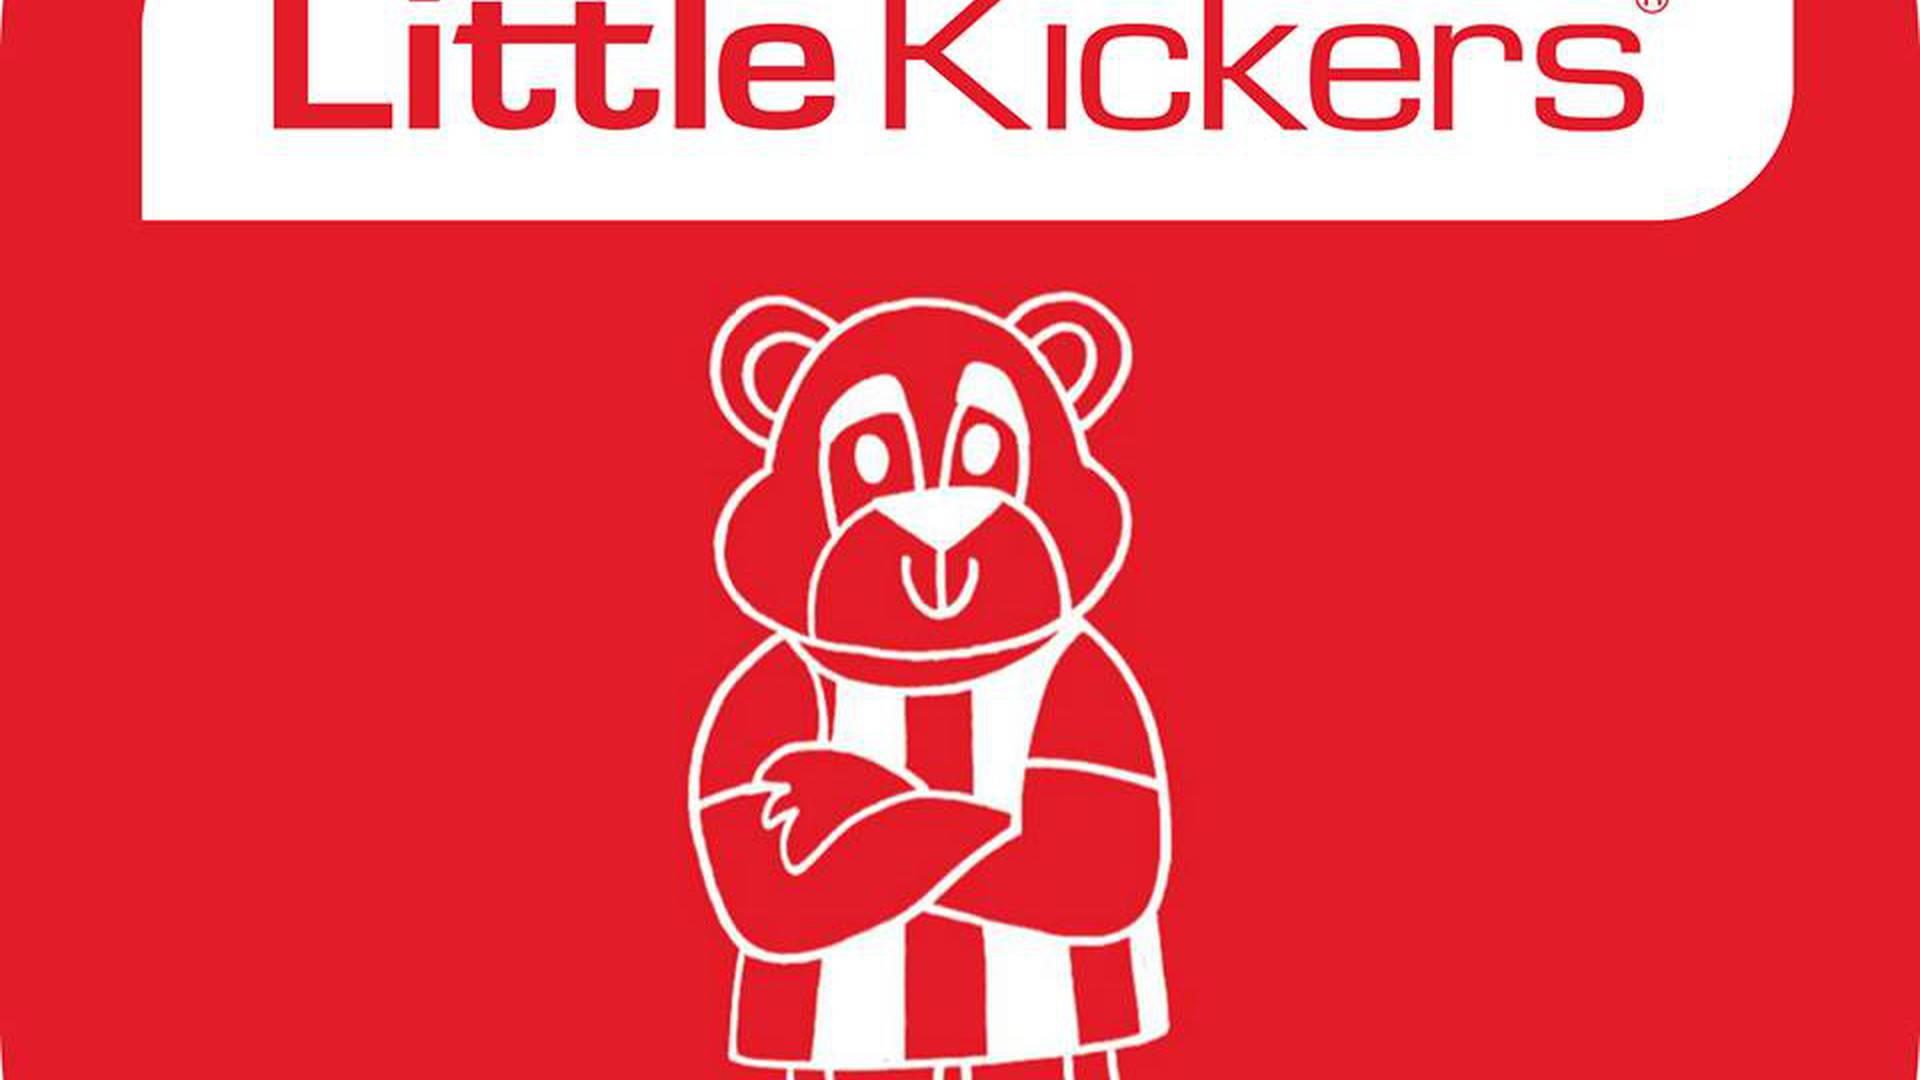 Little Kickers - Mighty Kickers photo